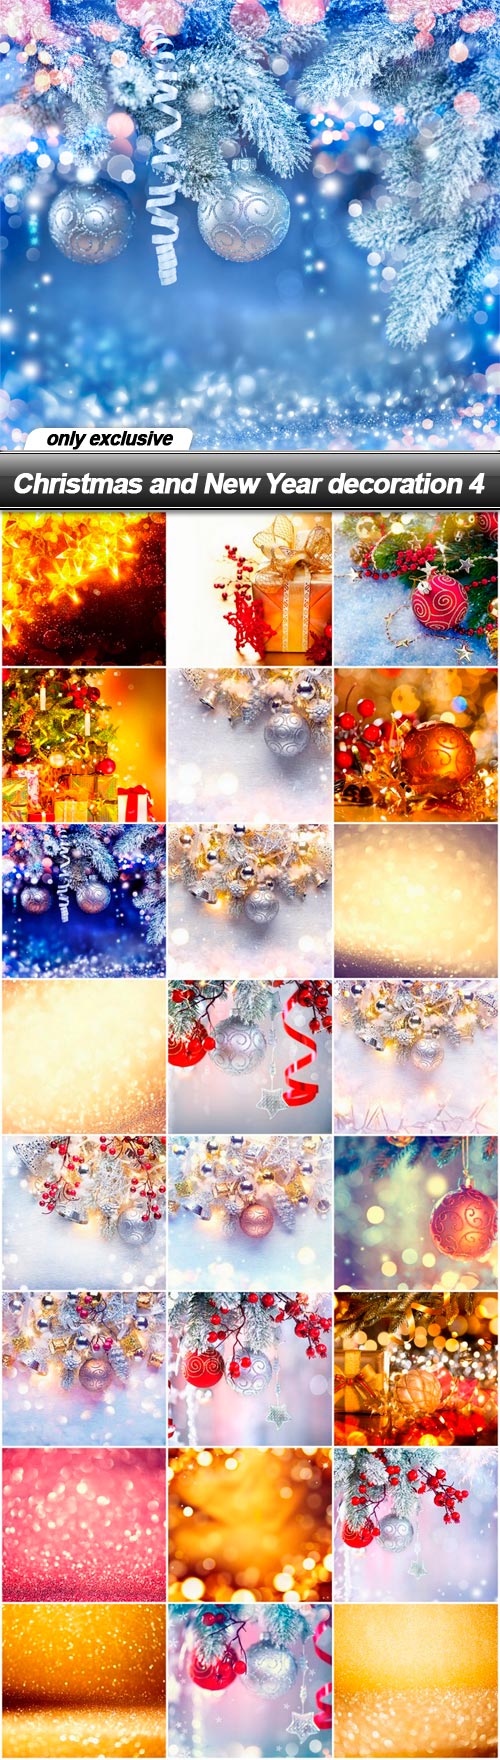 Christmas and New Year decoration 4 - 25 UHQ JPEG